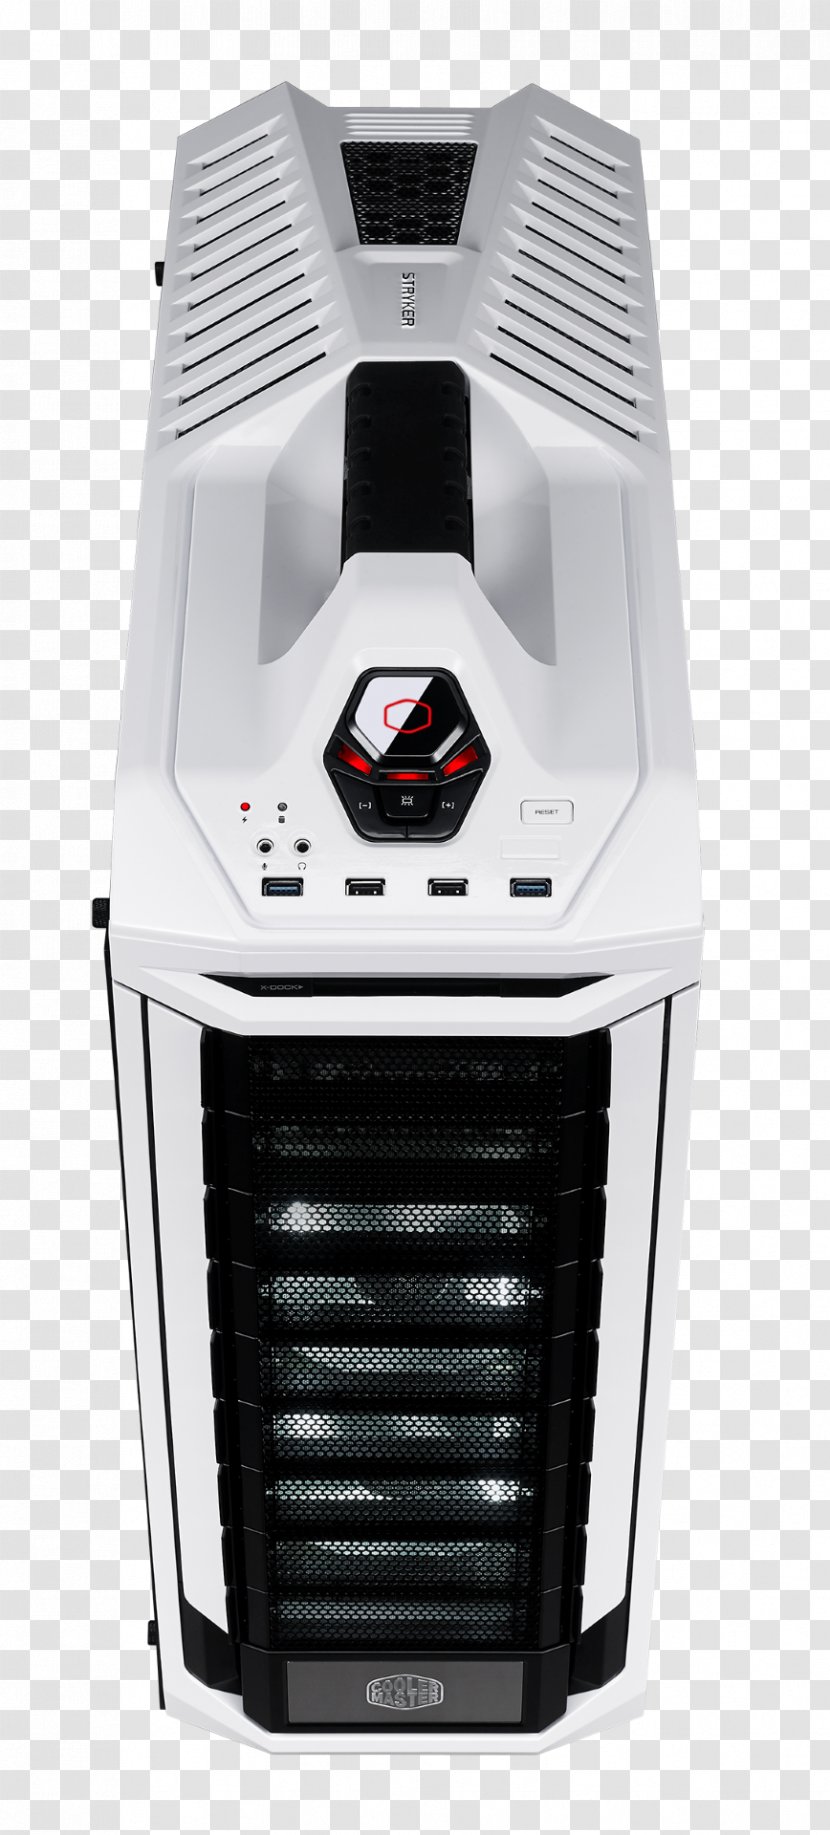 Computer Cases & Housings Cooler Master Silencio 352 ATX - Thermaltake Transparent PNG